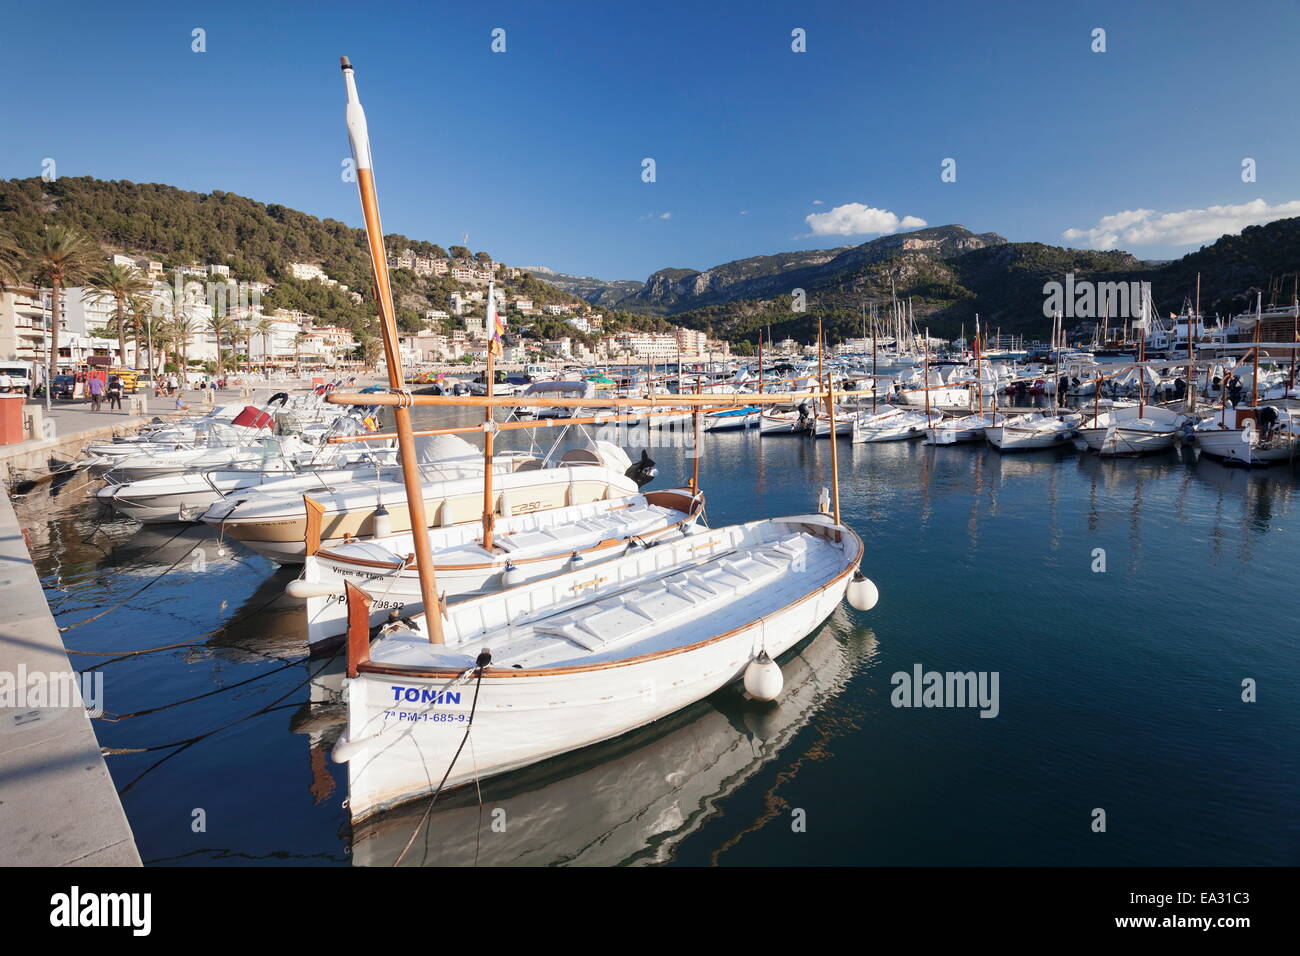 Angelboote/Fischerboote im Hafen, Port de Soller, Mallorca (Mallorca), Balearen, Spanien, Mittelmeer, Europa Stockfoto